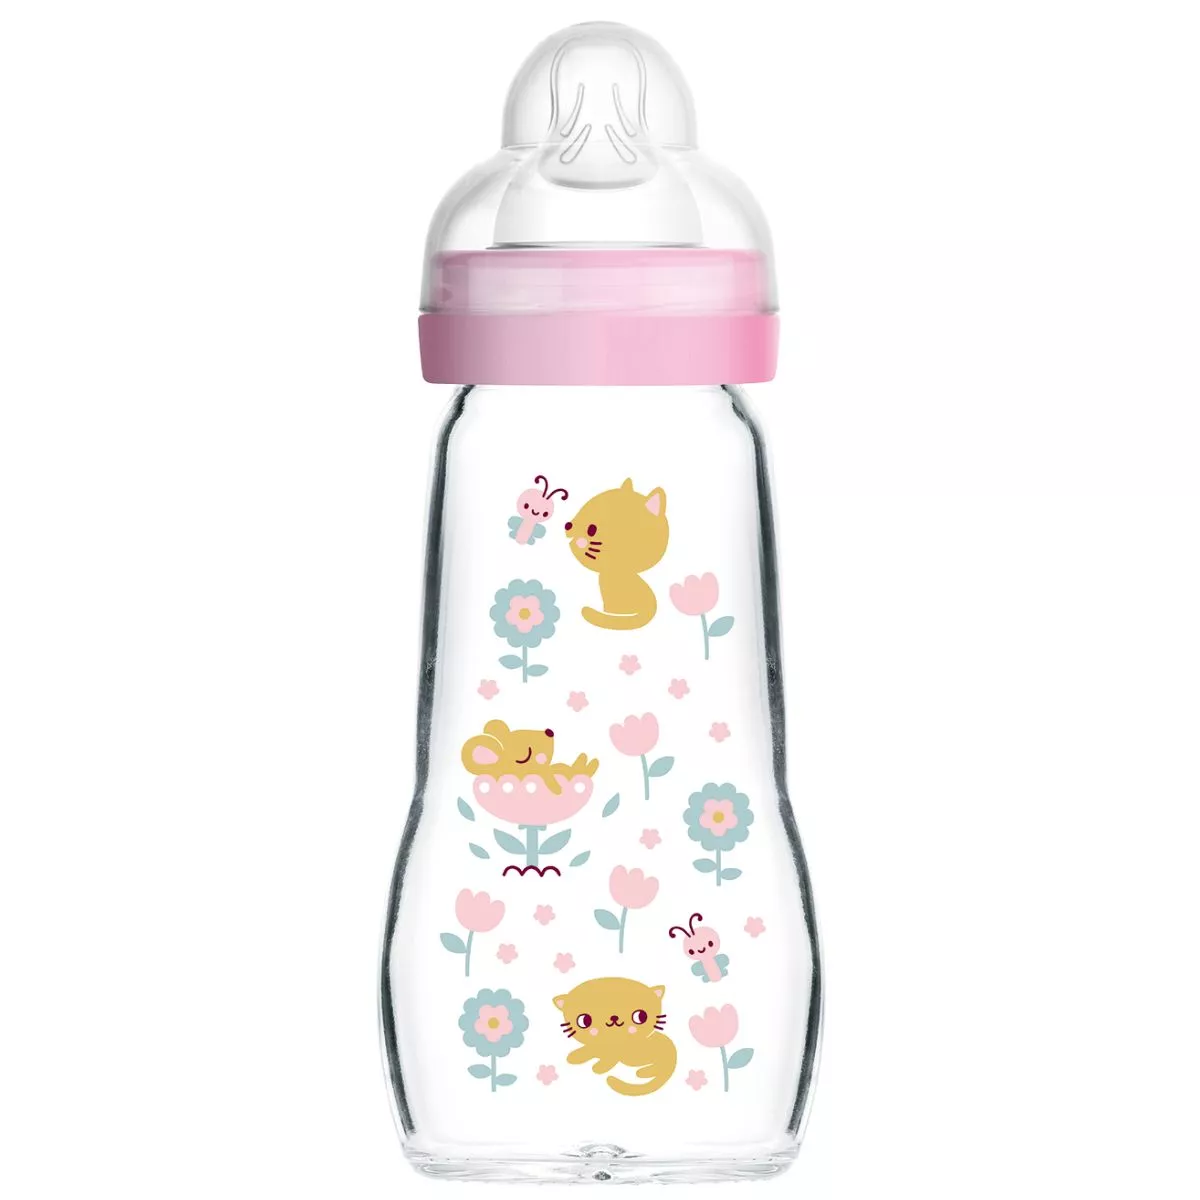 MAM Feel Good Baby Flasche aus Glas 260ml 2+ Monate, 1 Stck